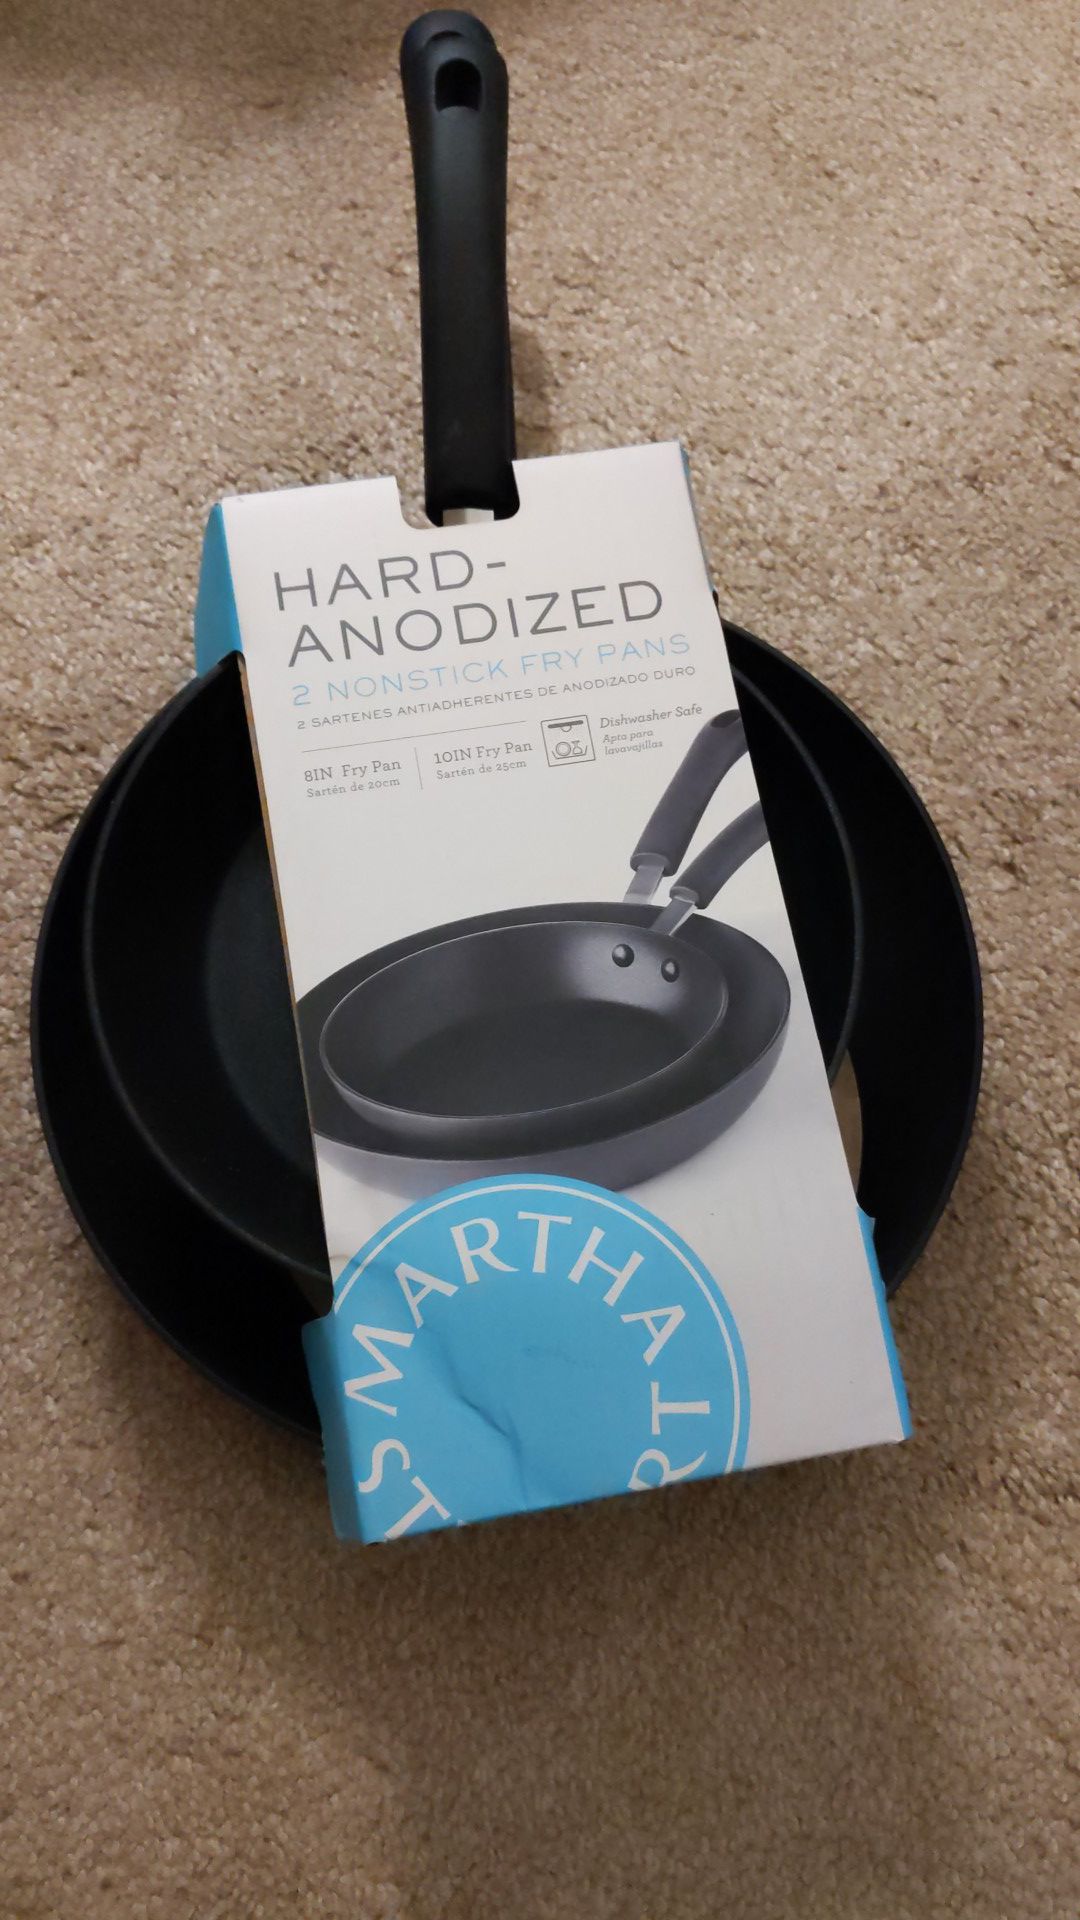 Martha Stewart Hard-Anodized Nonstick Fry Pans Brand New